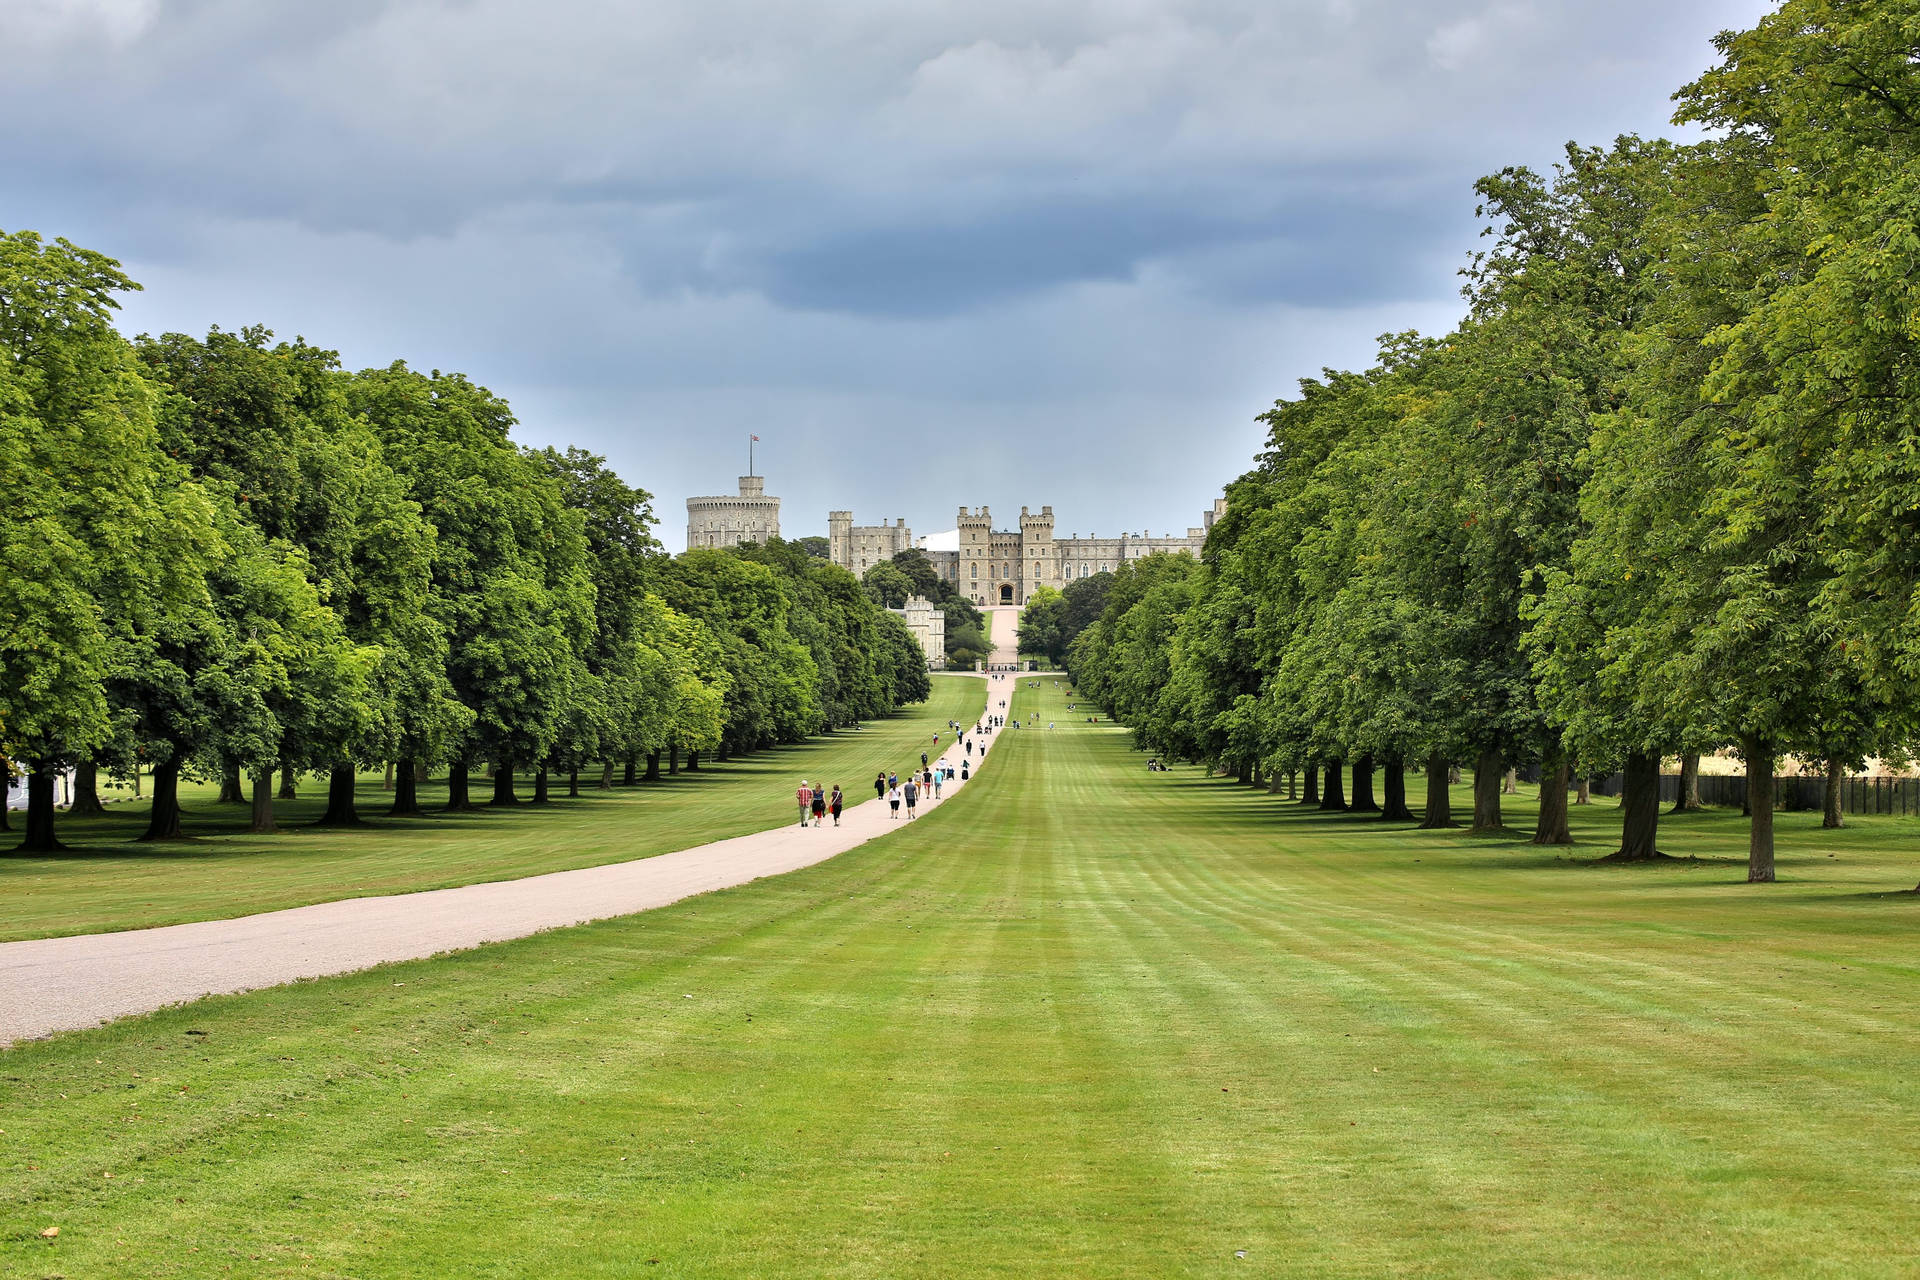 Caption: Majestic Windsor Castle In England